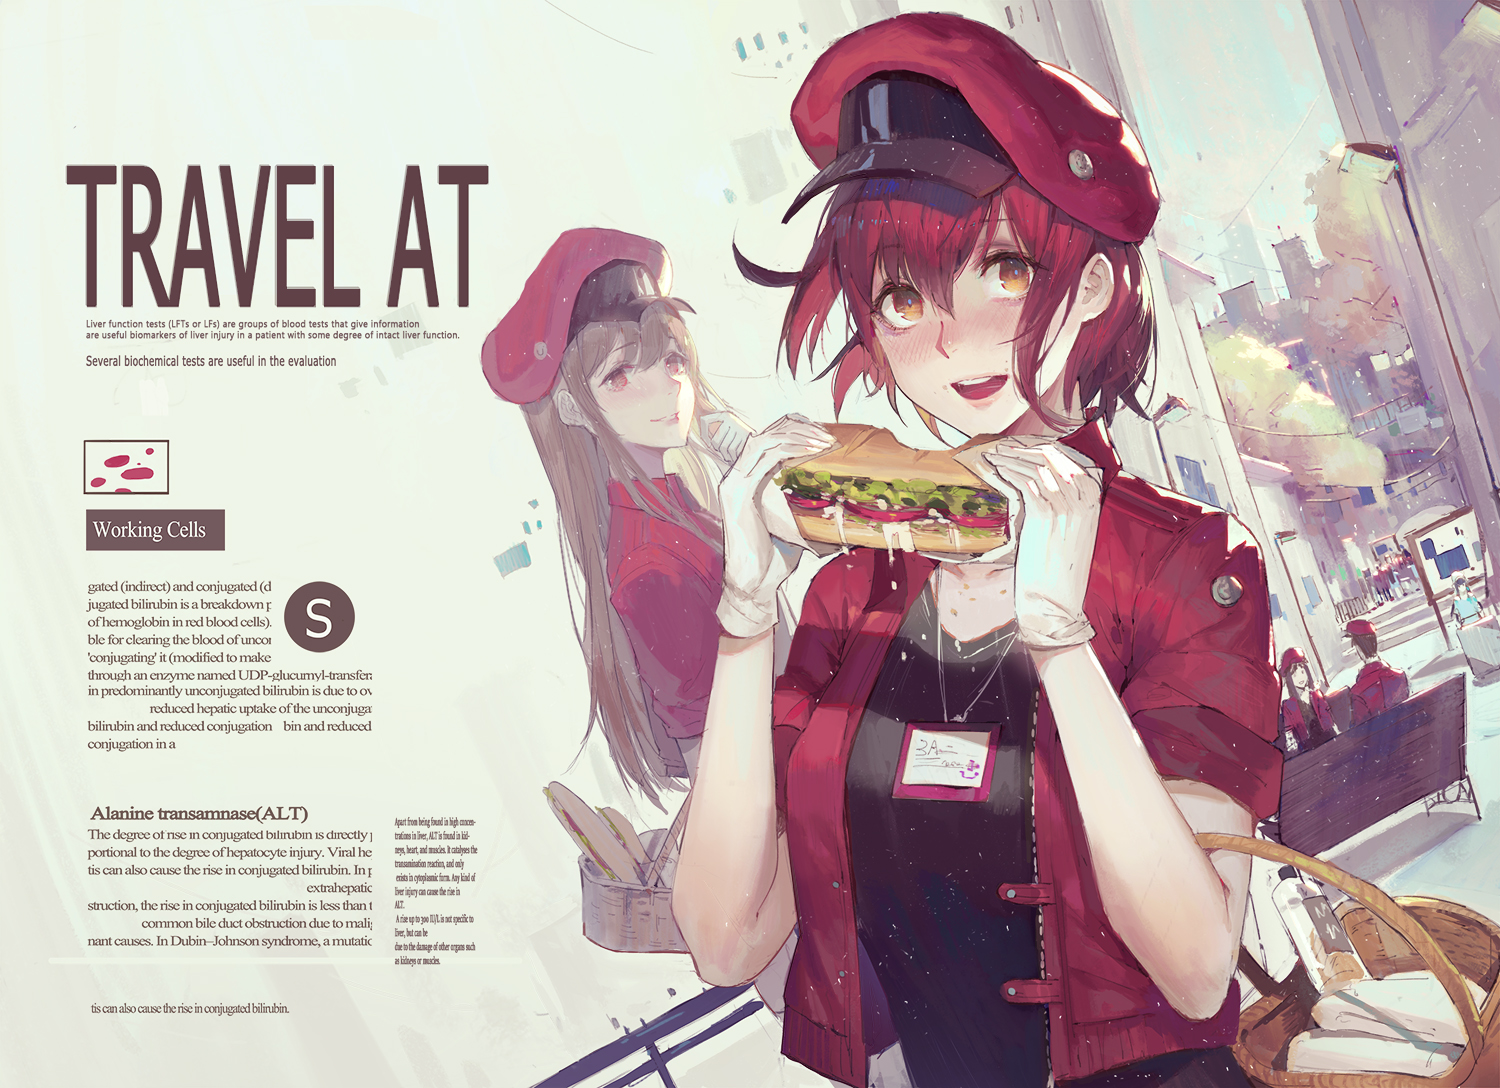 Hataraku Saibou Anime Girls Eating Red Hats White Gloves Sandwich Embarrassed Red Jackets Women Outd 1500x1088